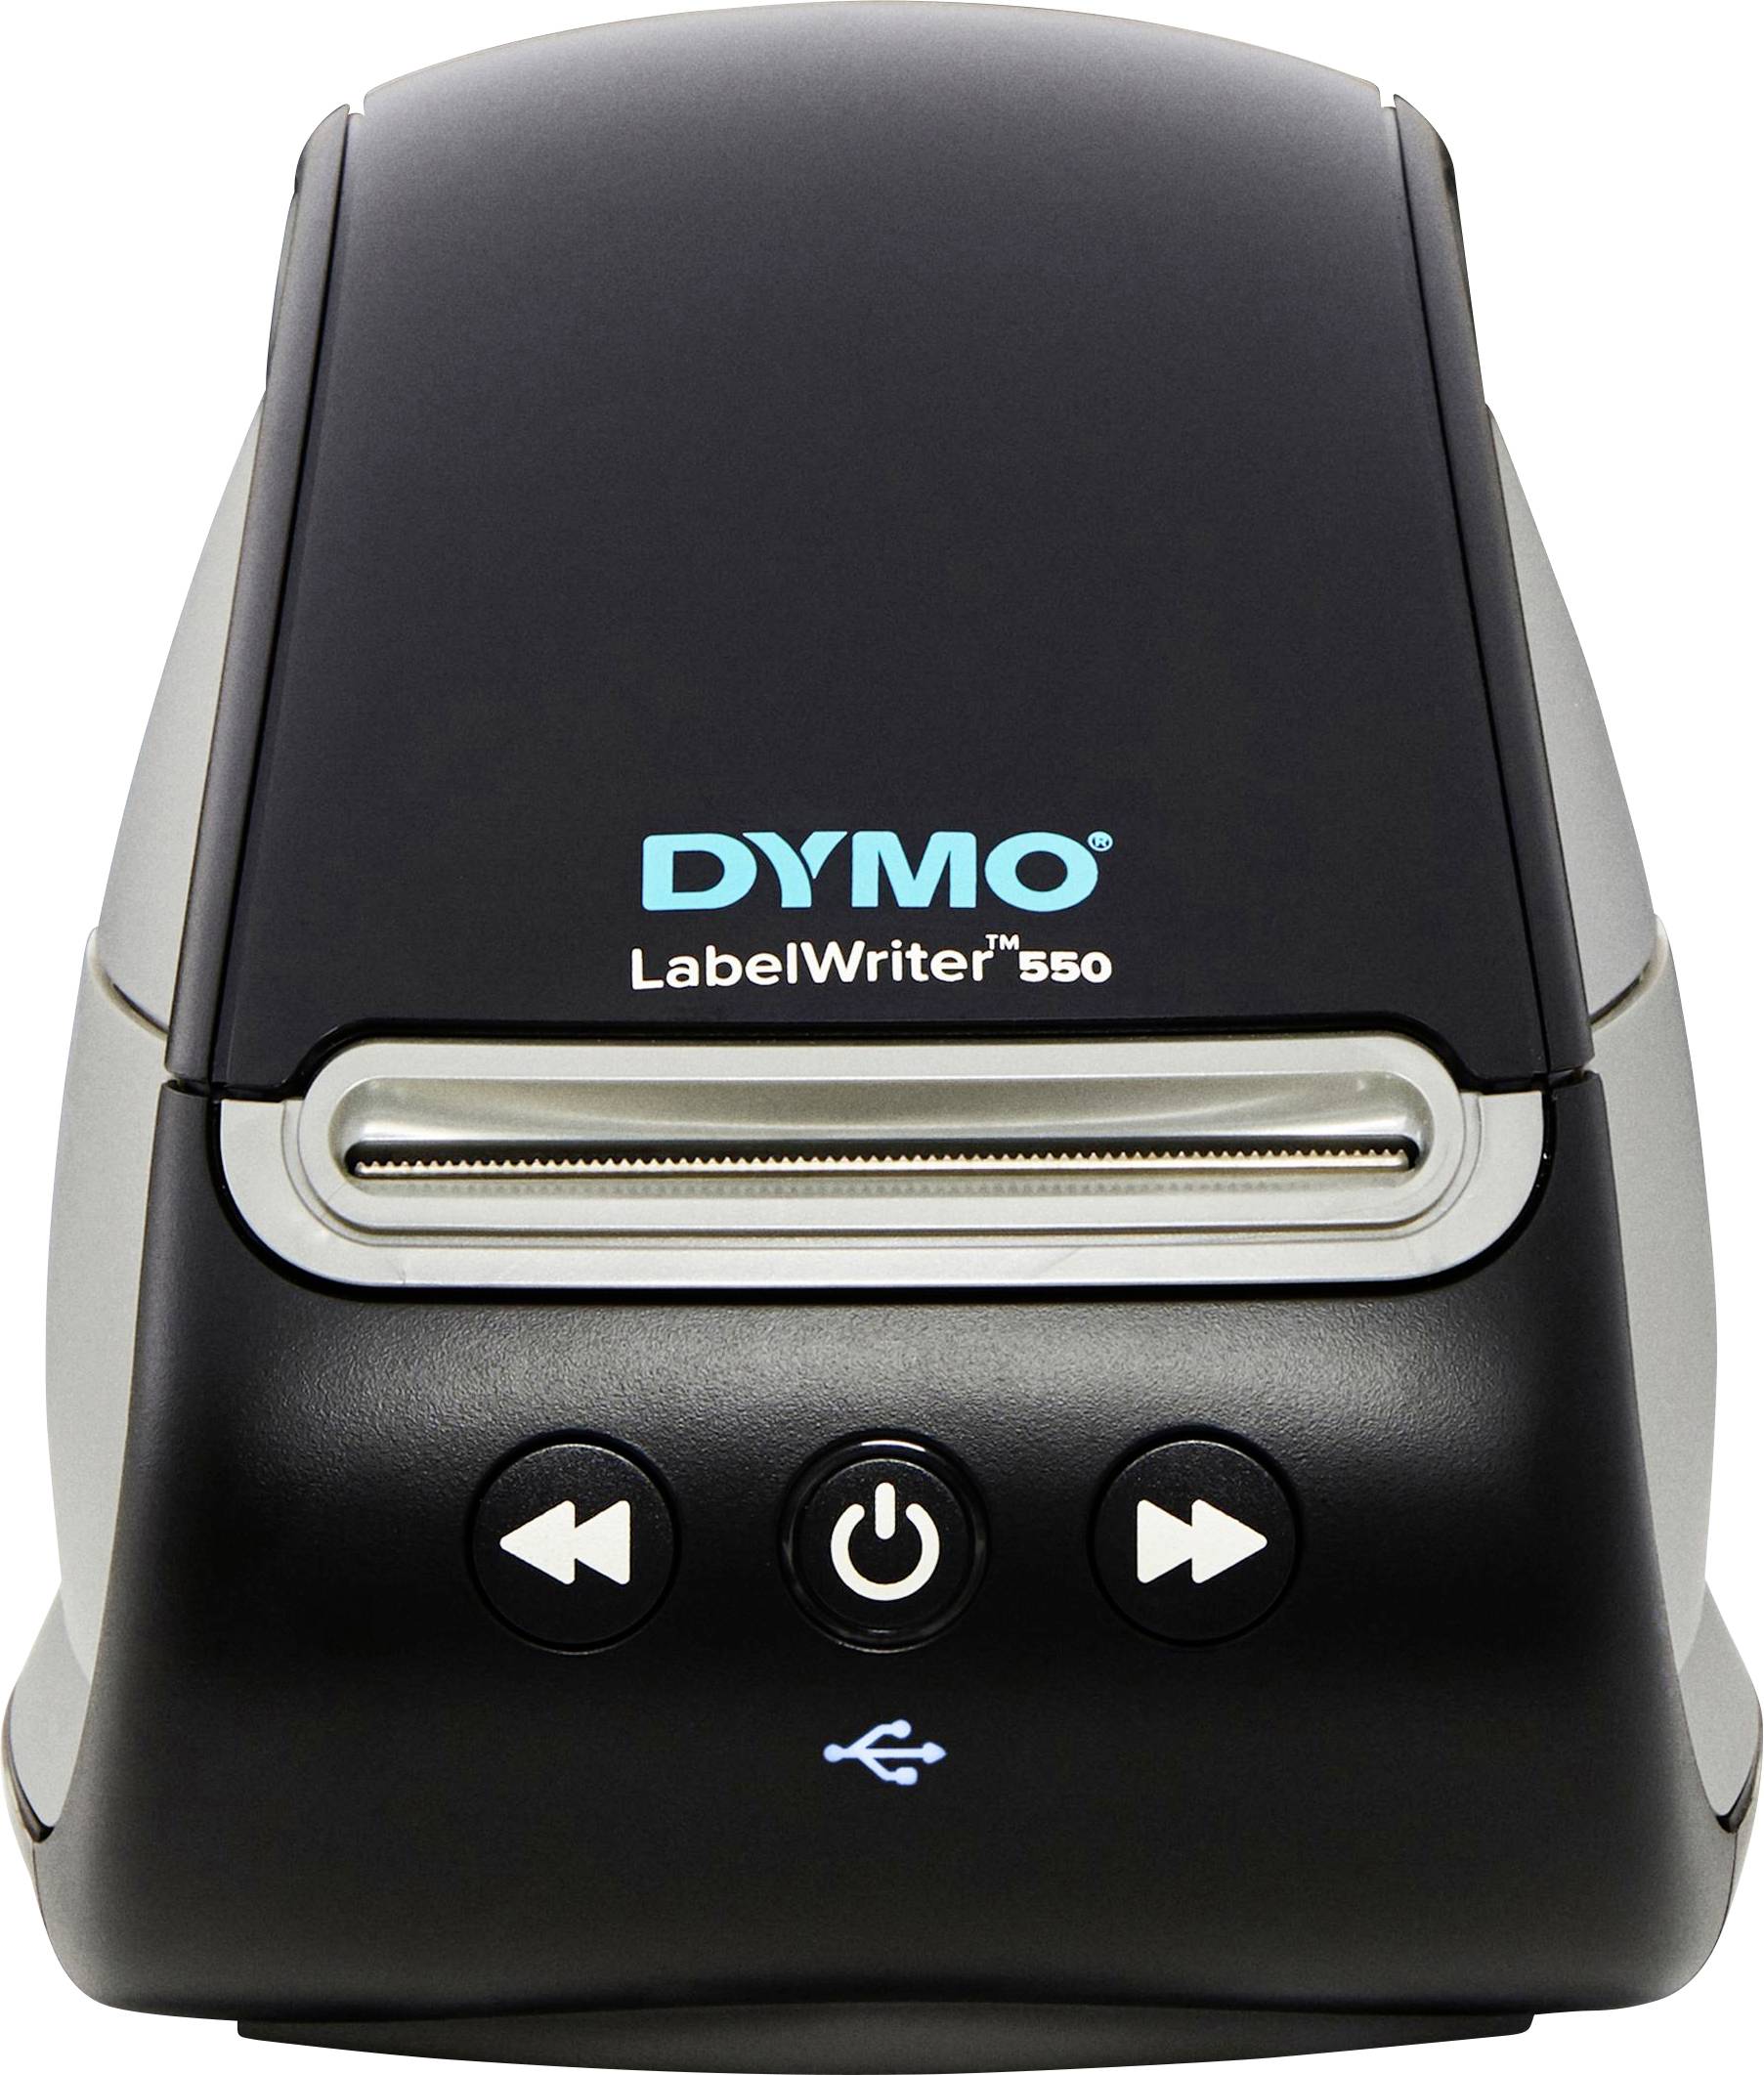 dymo labelwriter 400 turbo software download windows 10